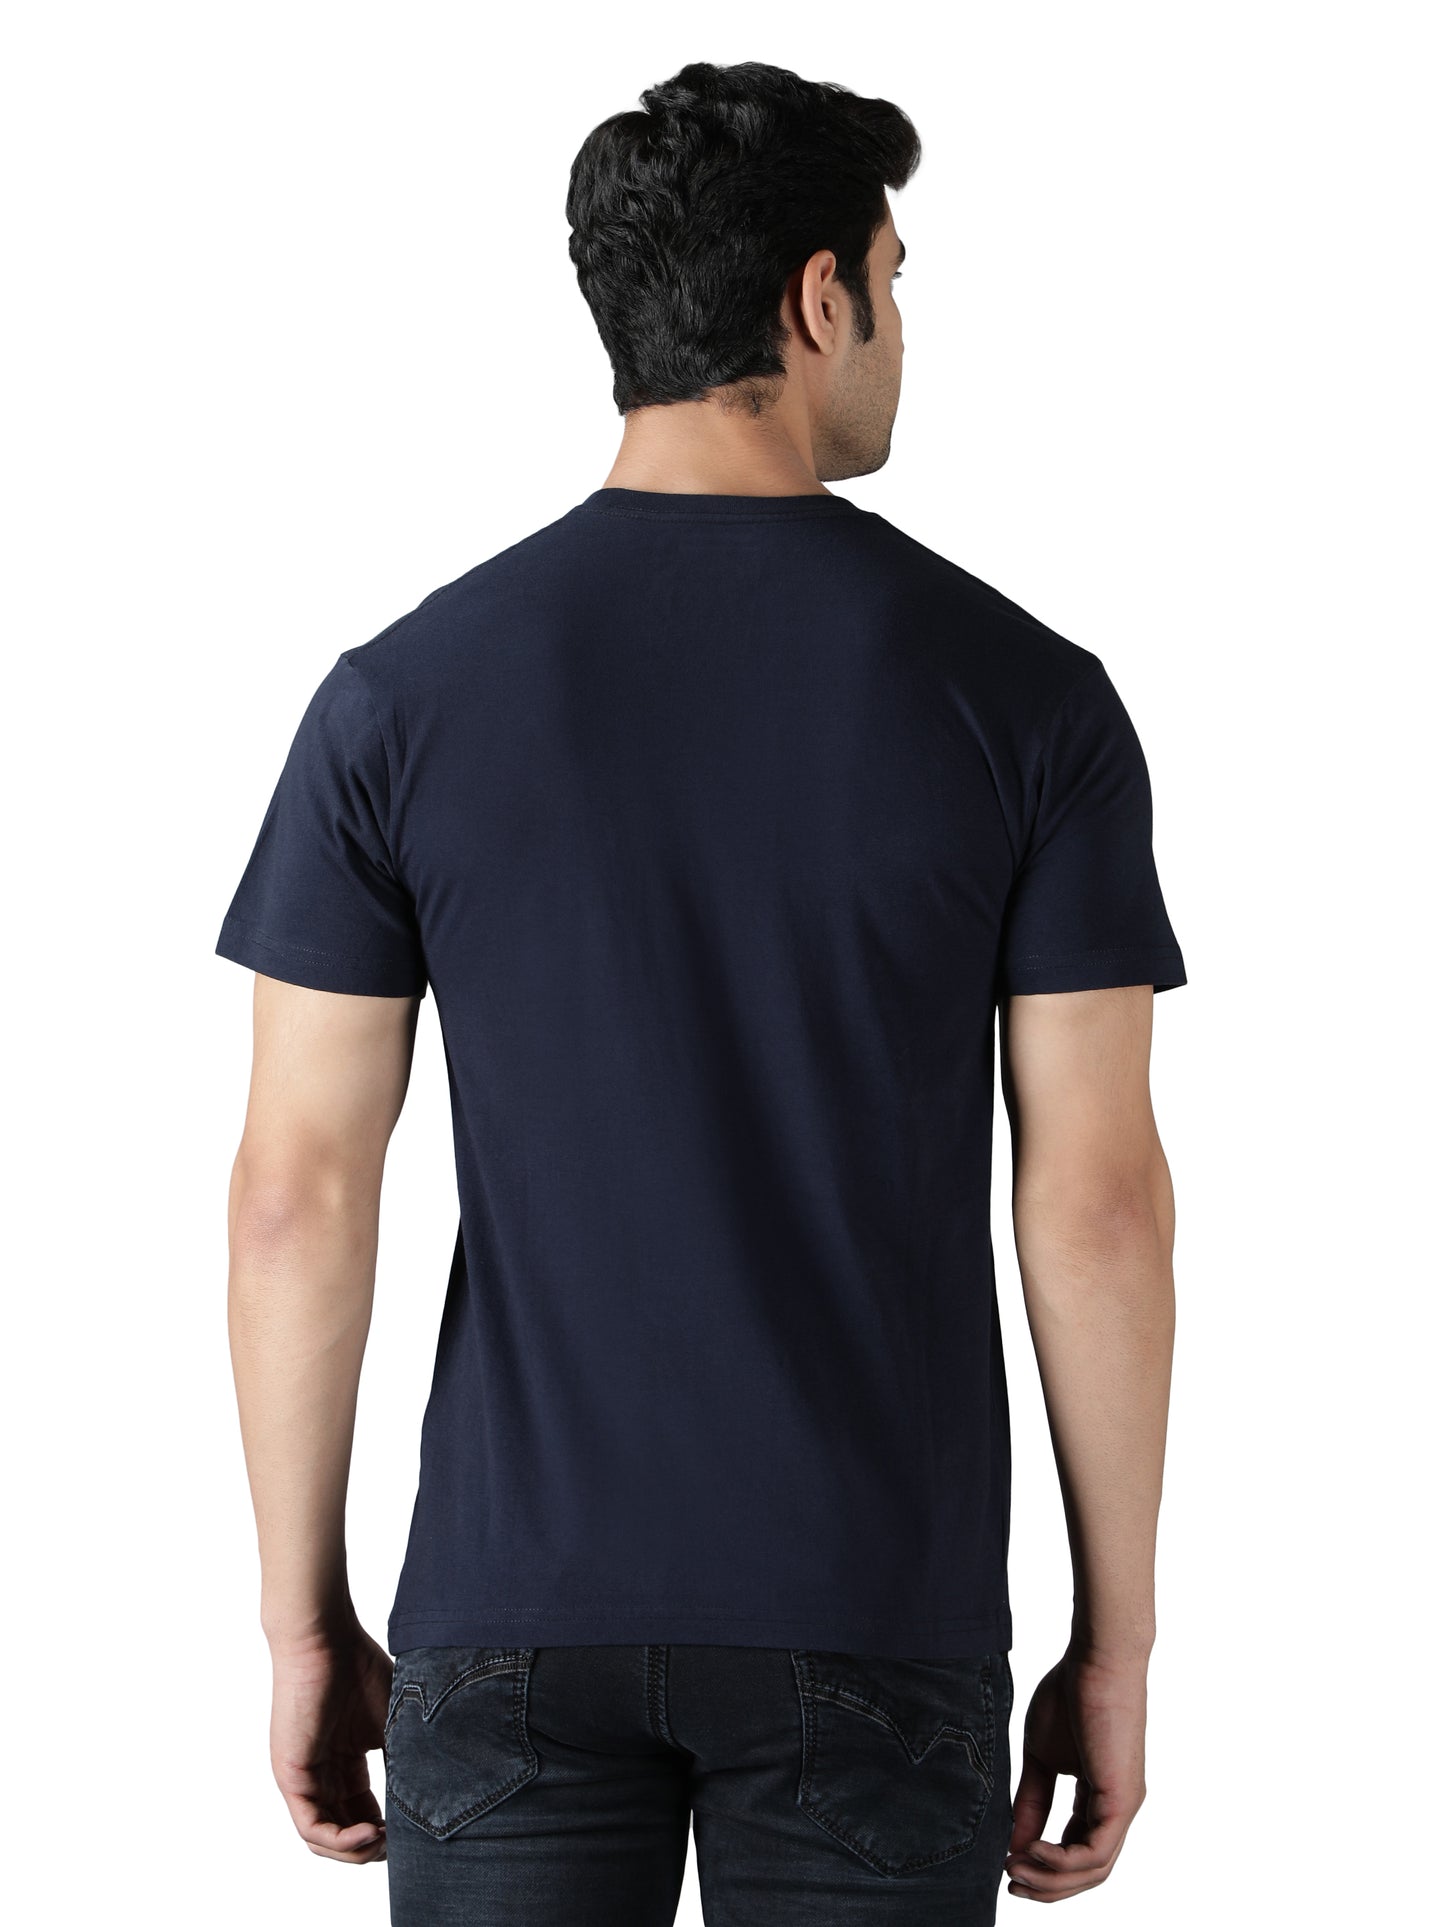 NUEVOSPORTA Men's Cotton Graphic Printed Blue T-Shirt